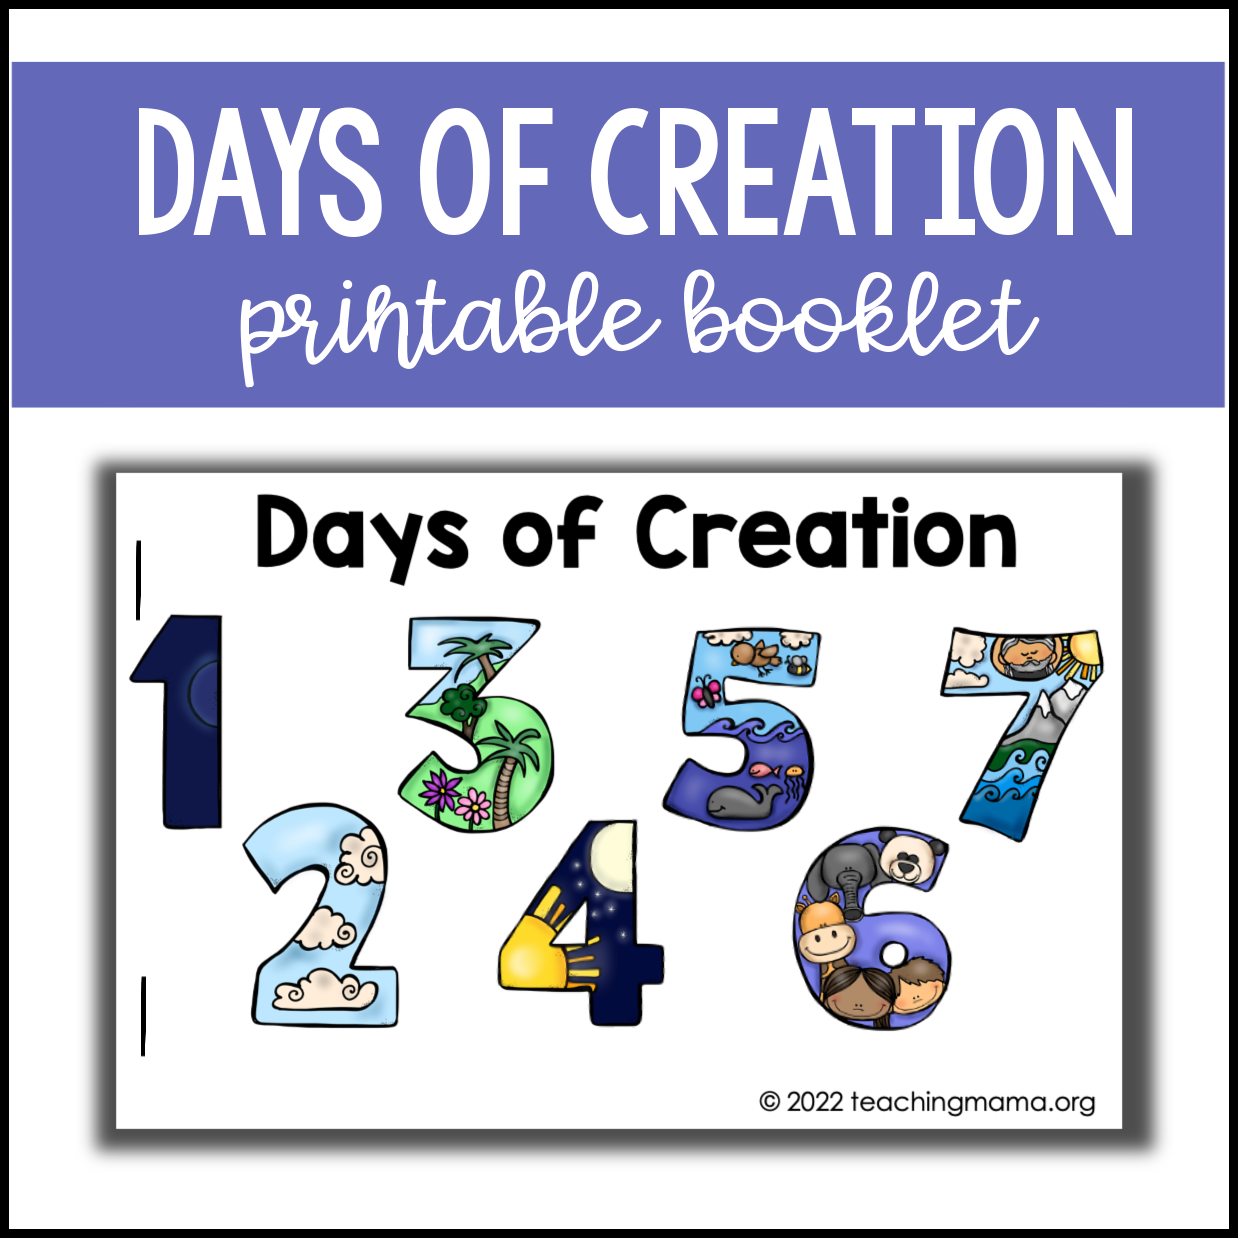 Printable 7 Days Of Creation